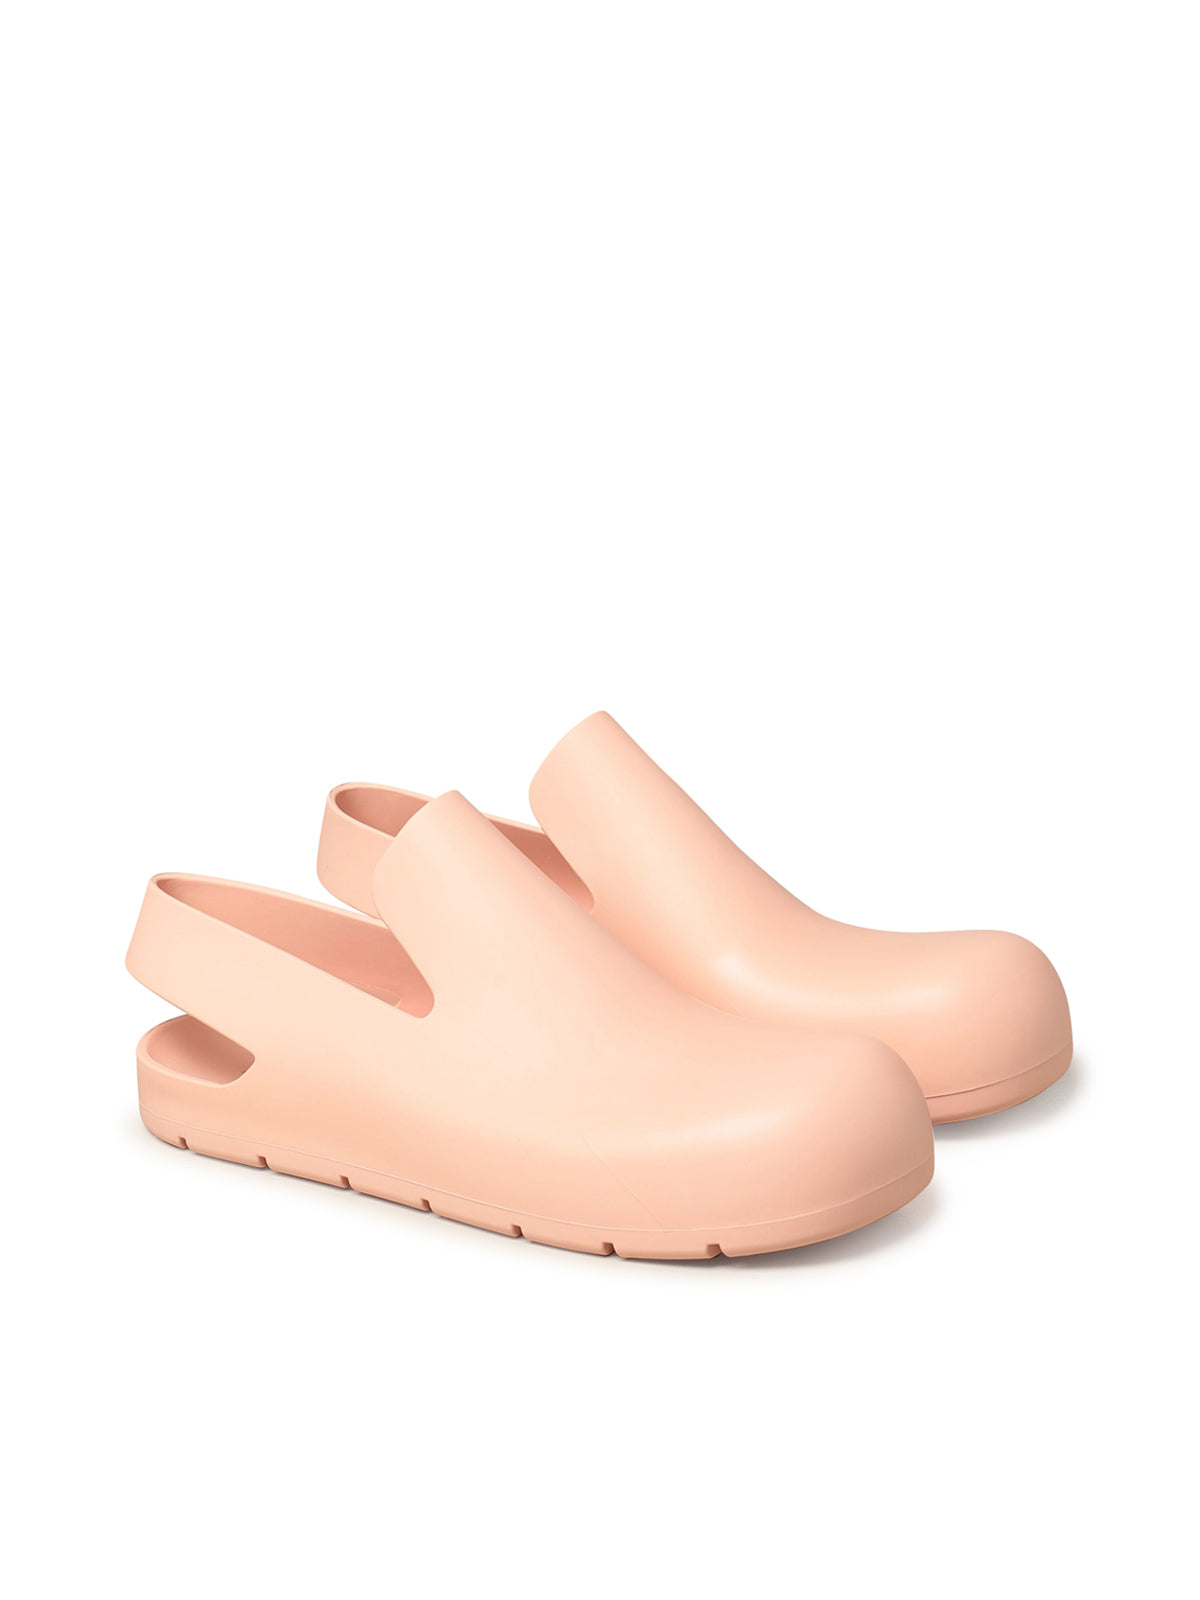 Puddle rubber sandal